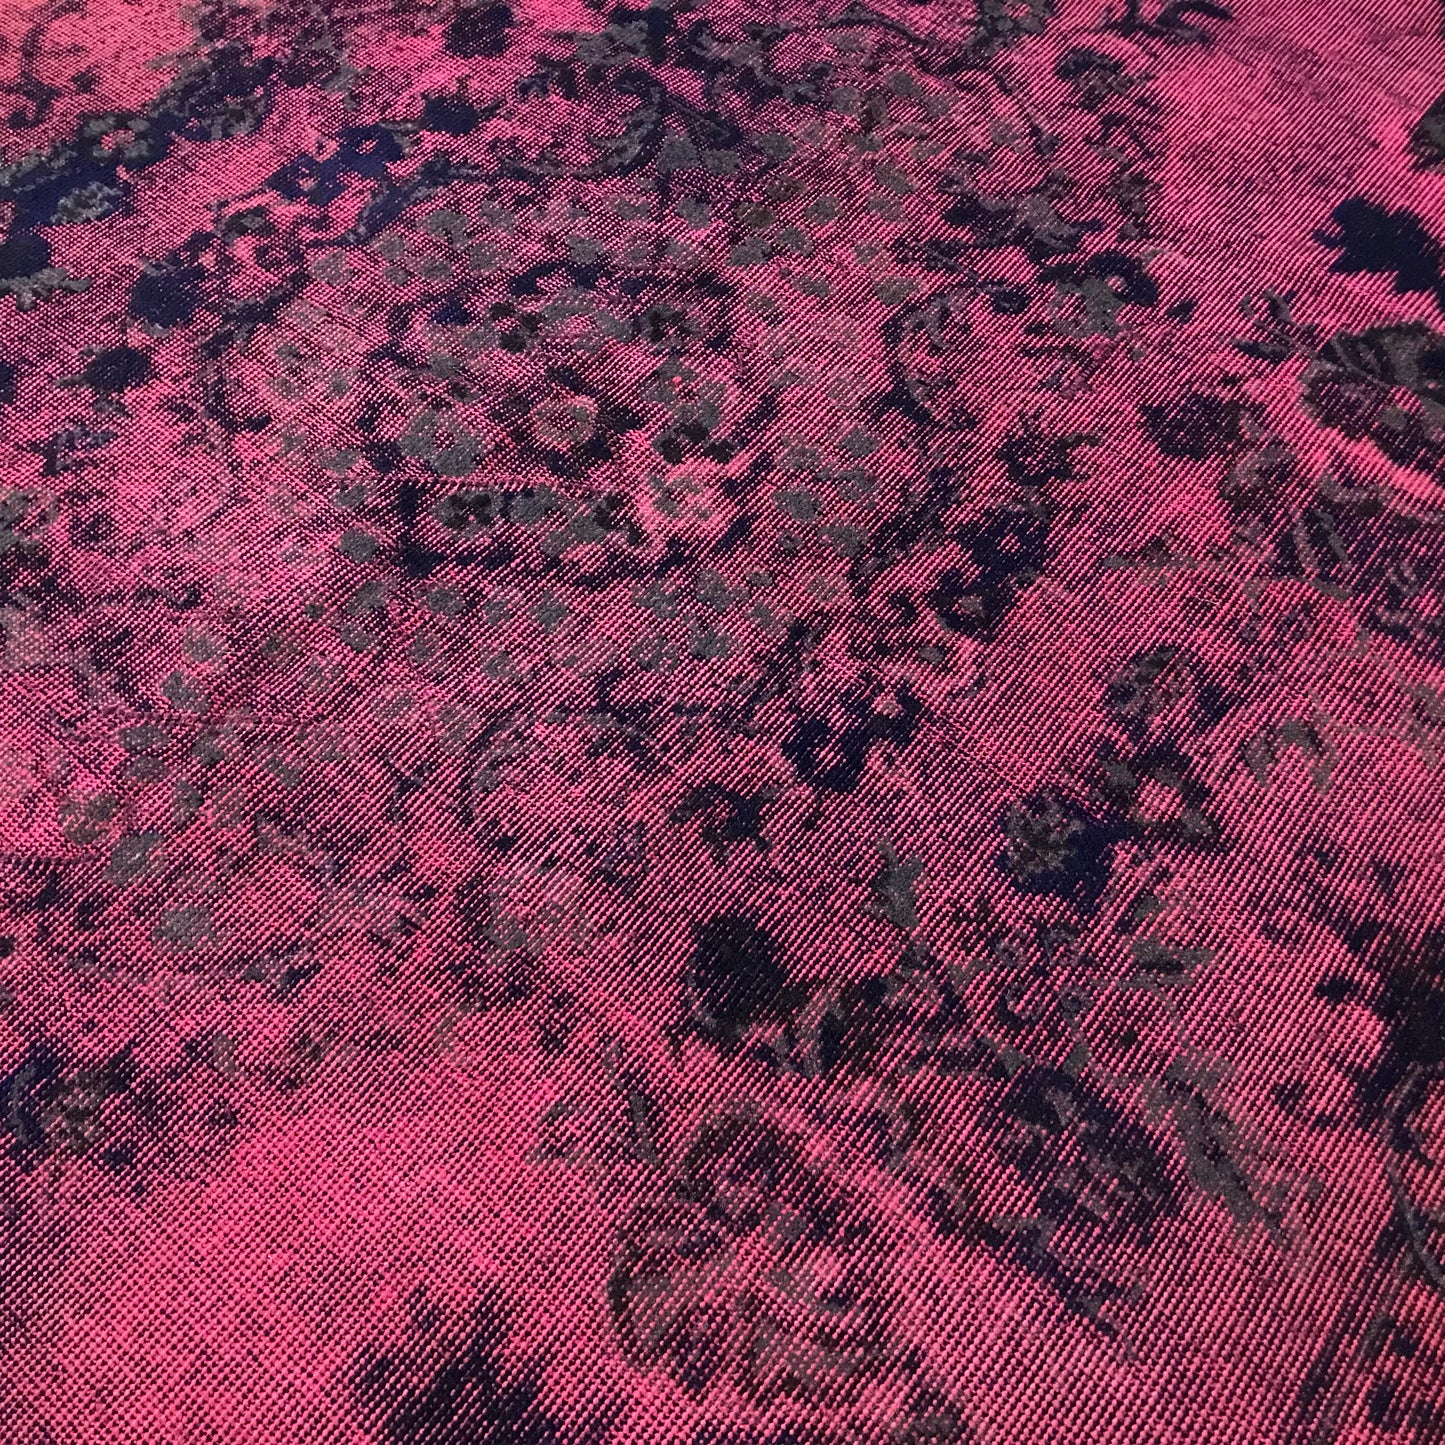 Antique Artisan Re-Worked Turkish Carpet Fuchsia